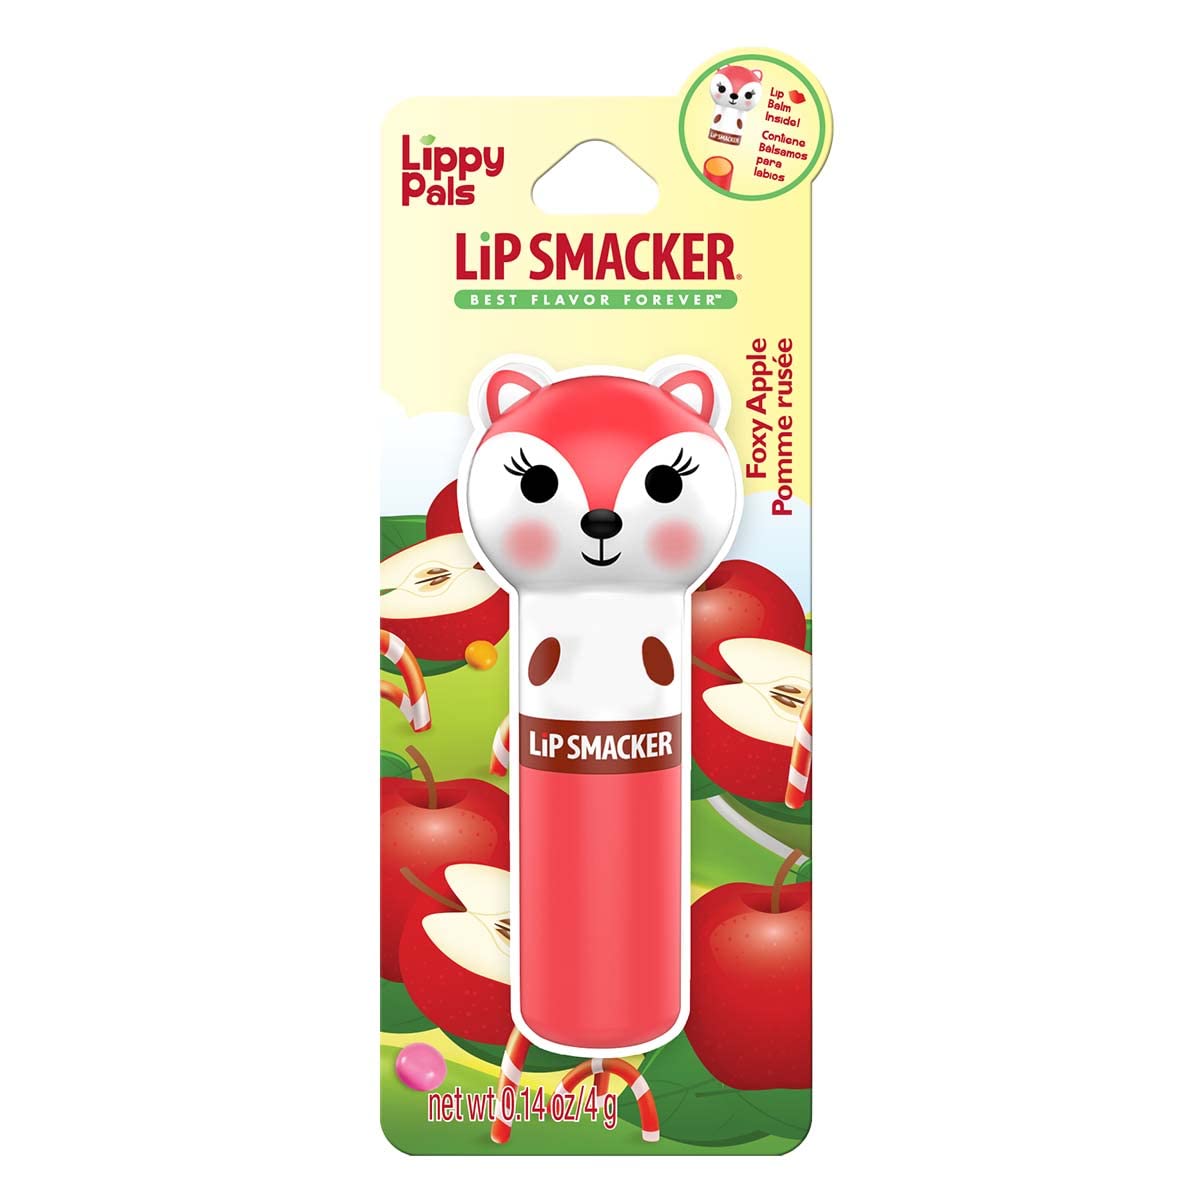 Lip Smacker Lippy Pals Fox, Flavored Moisturizing & Smoothing Soft Shine Lip Balm, Hydrating & Protecting Fun Tasty Flavors, Cruelty-Free & Vegan - Foxy Apple